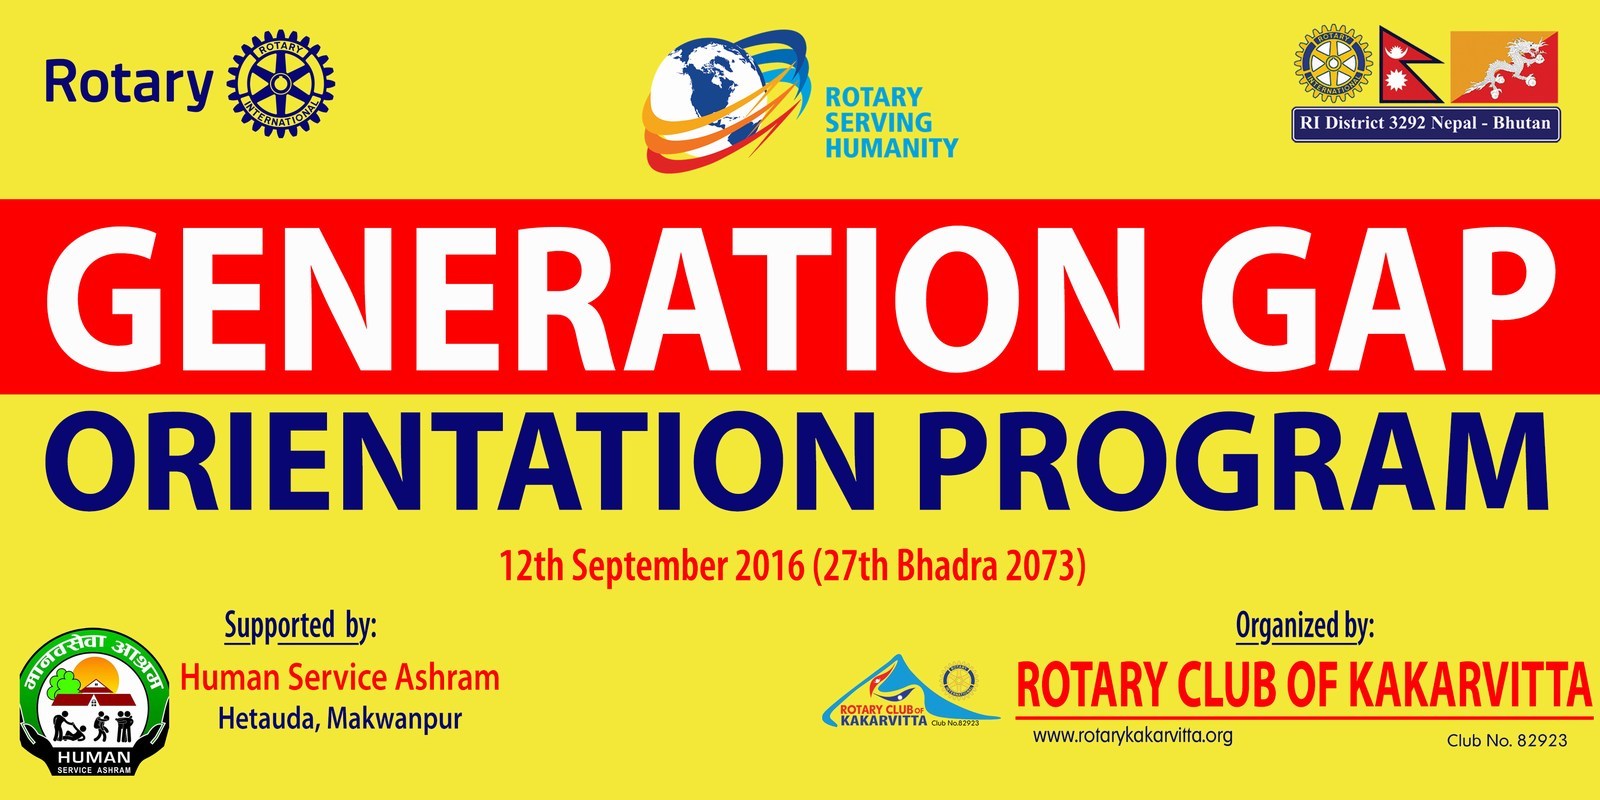 Generation-Gap-Orientation-Program-Rotary-Club-of-Kakarvitta-1